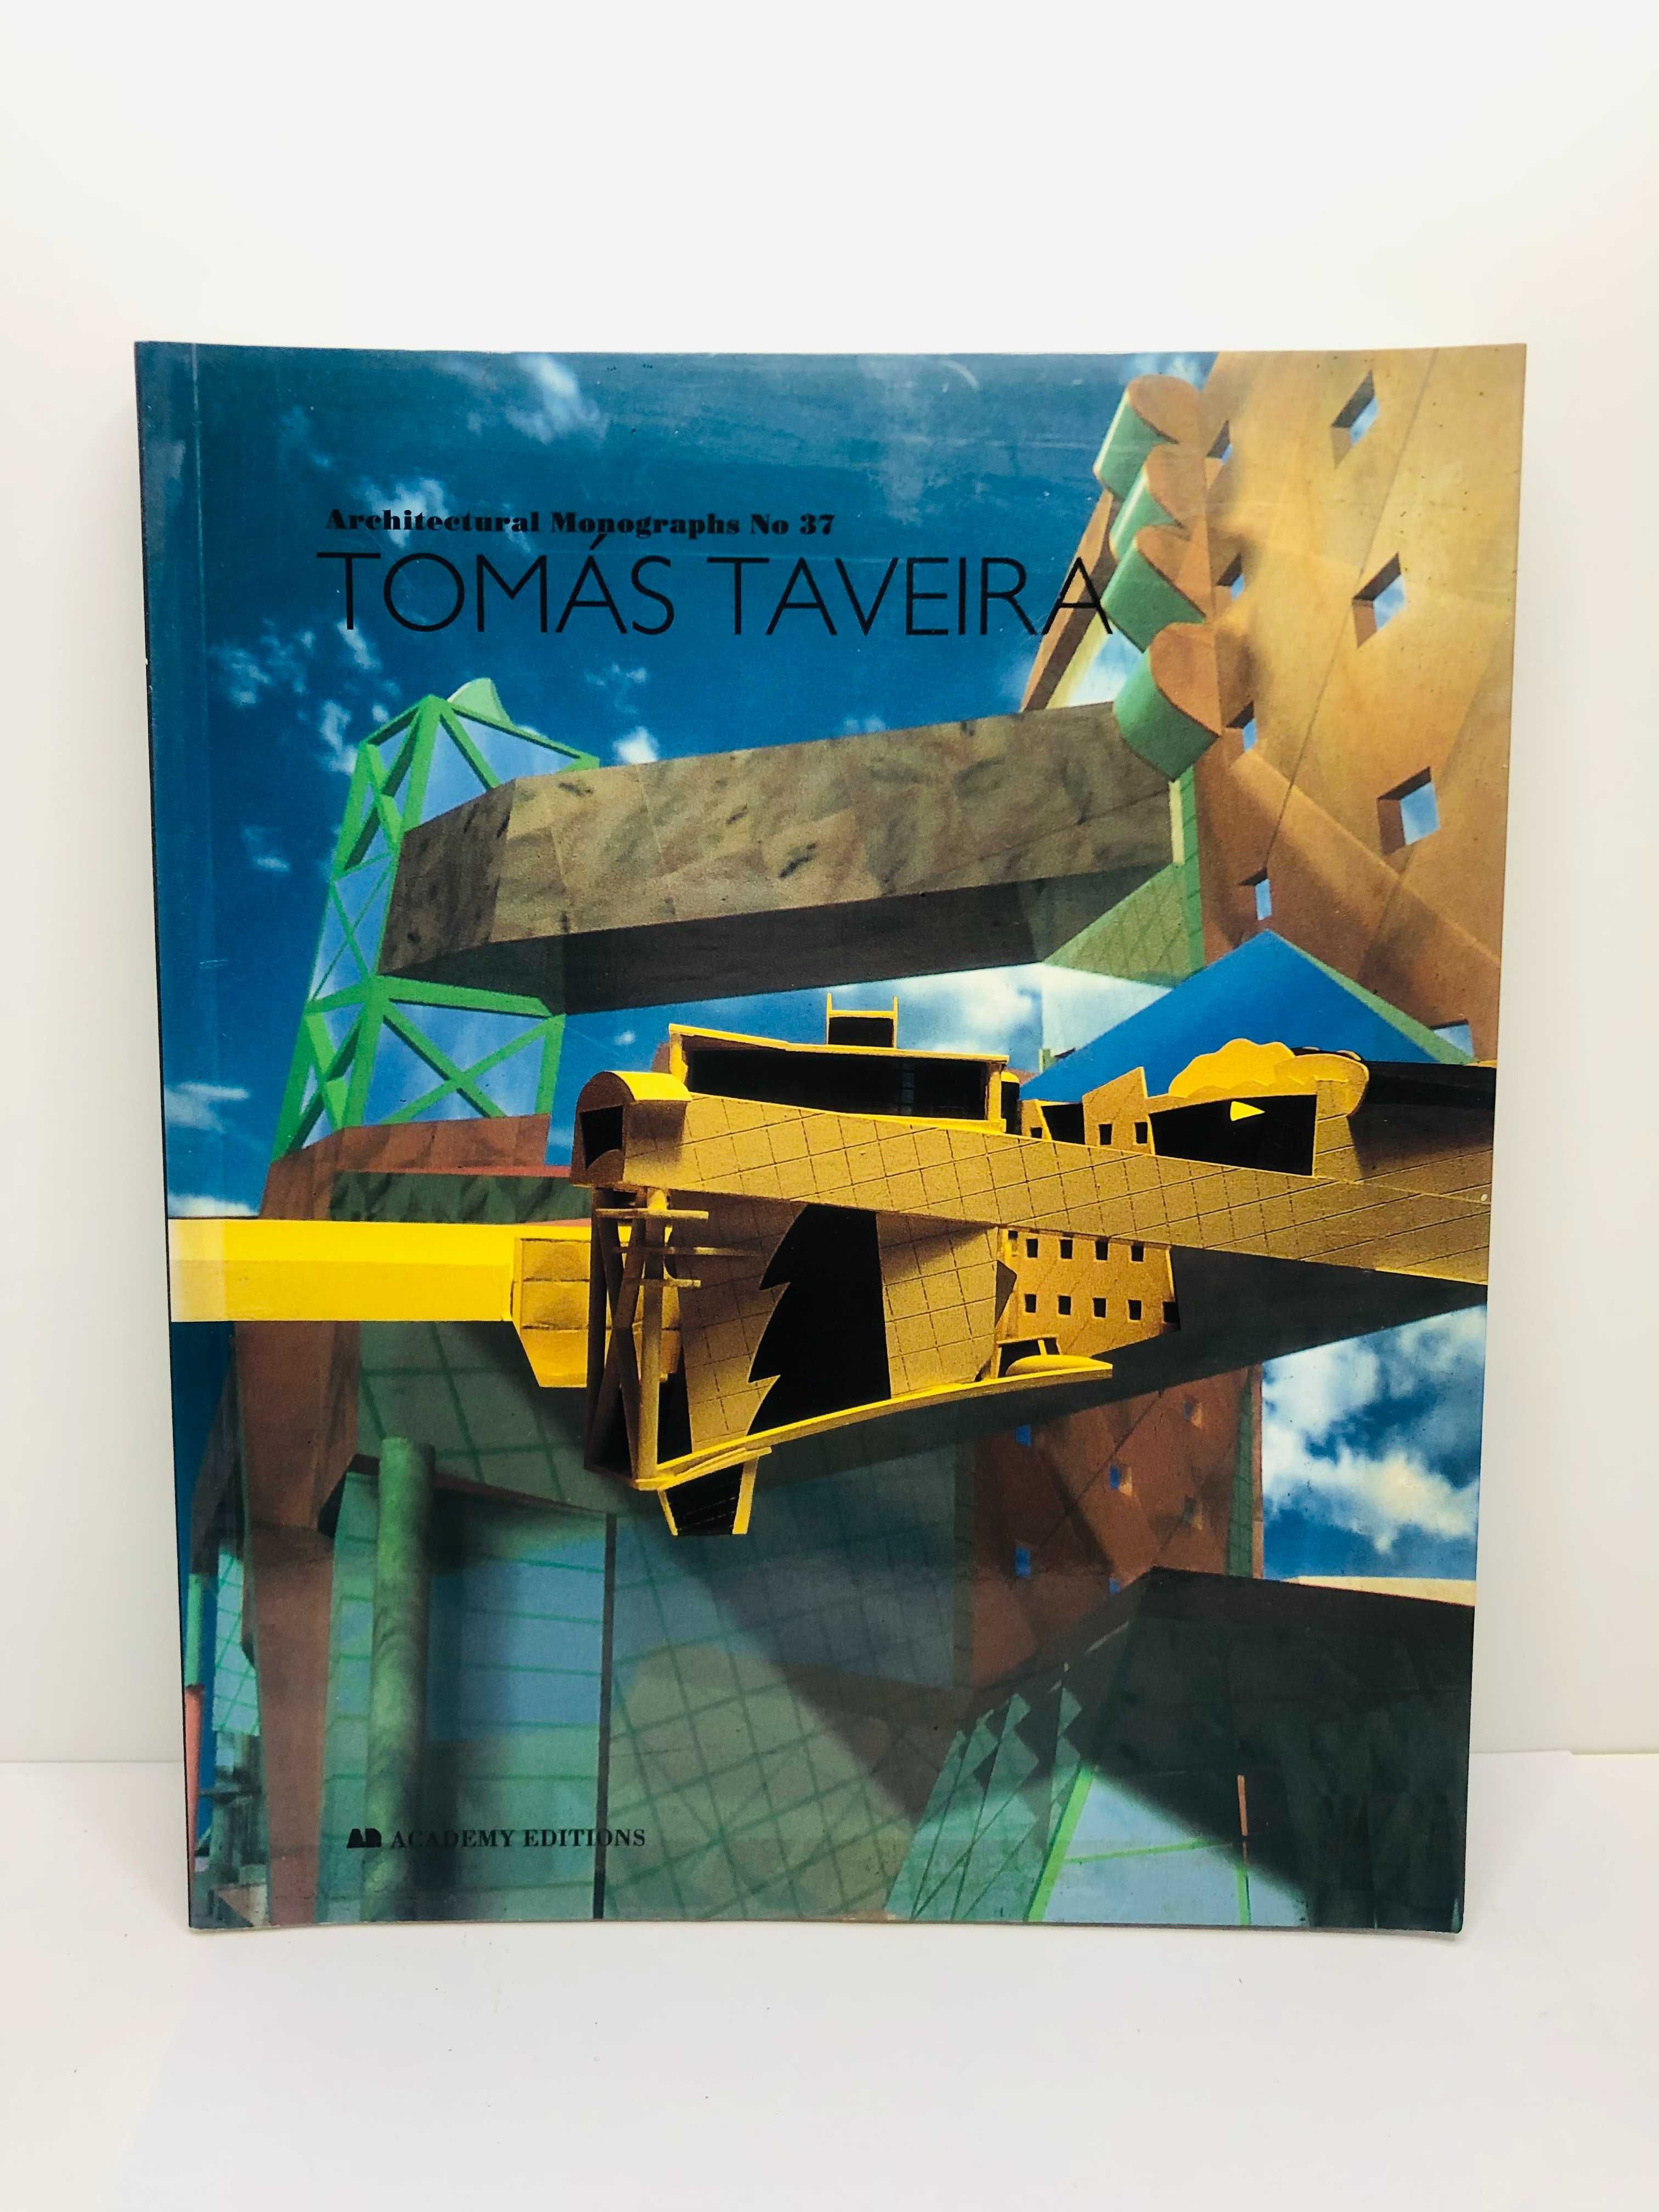 TOMÁS TAVEIRA, ARCHITECTURAL MONOGRAPHS. NO 37